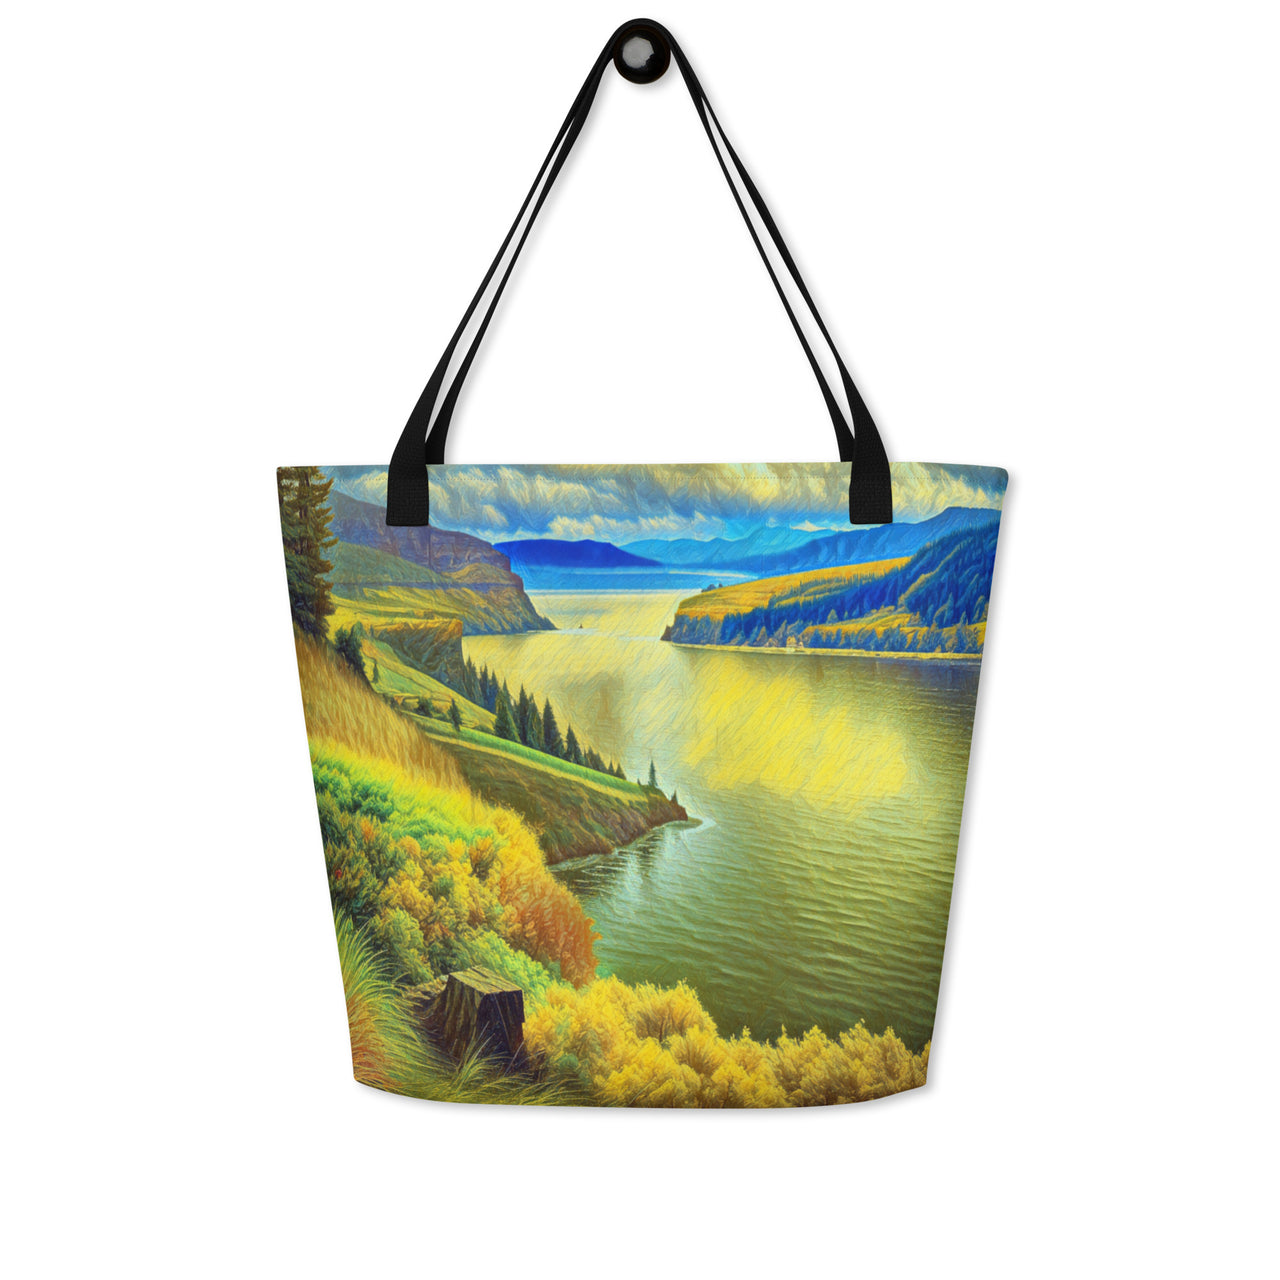 Columbia River Gorge - Digital Art - Large 16x20 Tote Bag W/Pocket